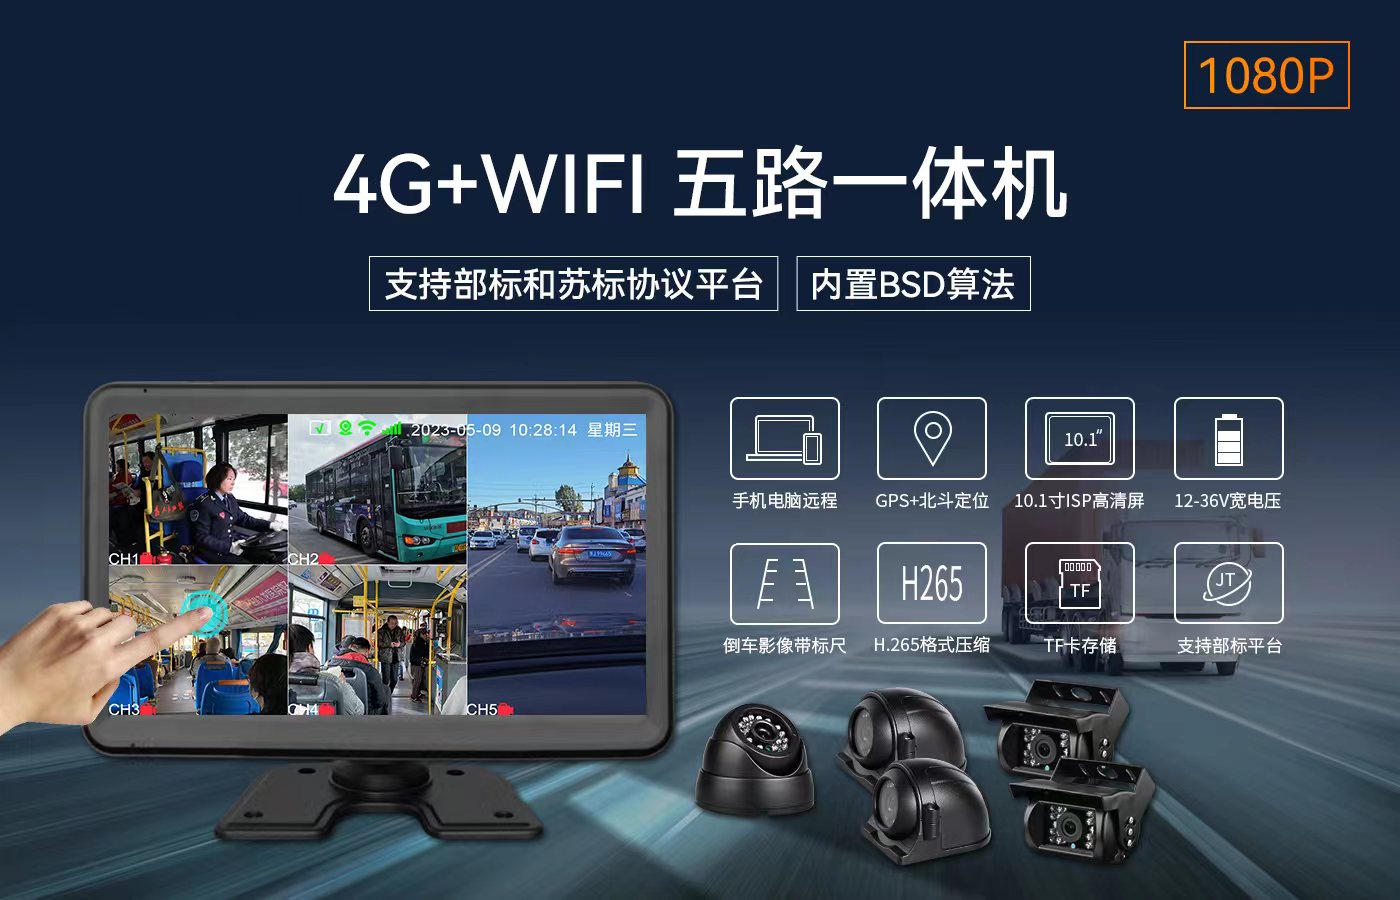 4G远程10寸屏一体机带4路BSD盲区报警功能 用于 大货车，货拉拉等